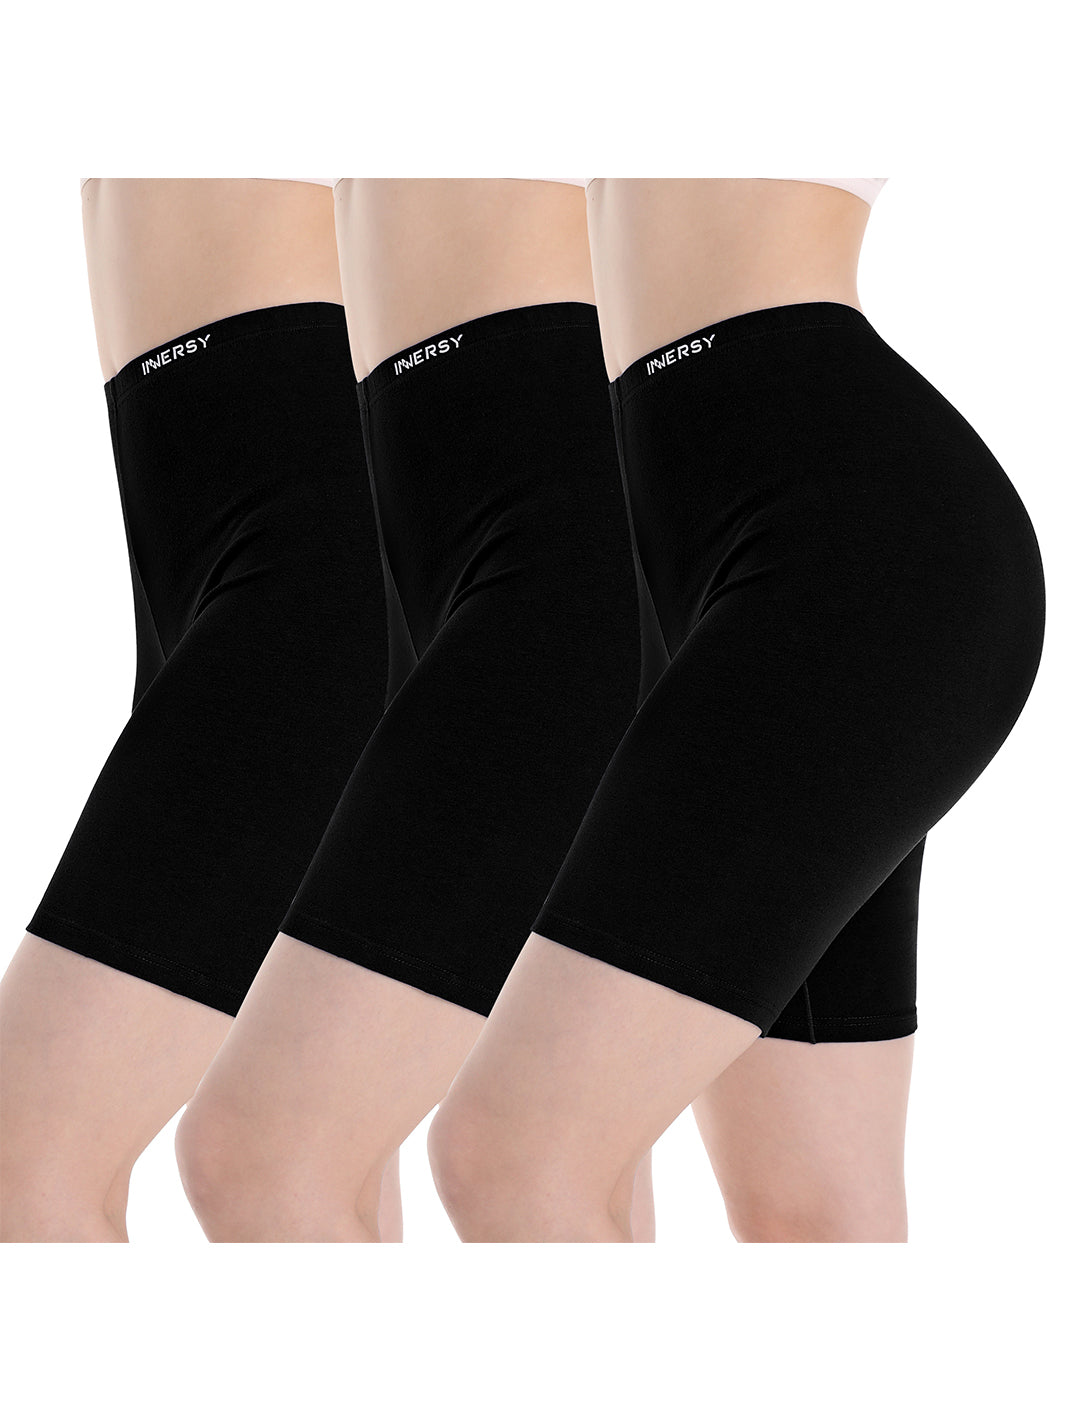 INNERSY Slip Shorts for Women High Waisted Under Dresses Summer Shorts 3  Pack (L, Black/Nude/White)